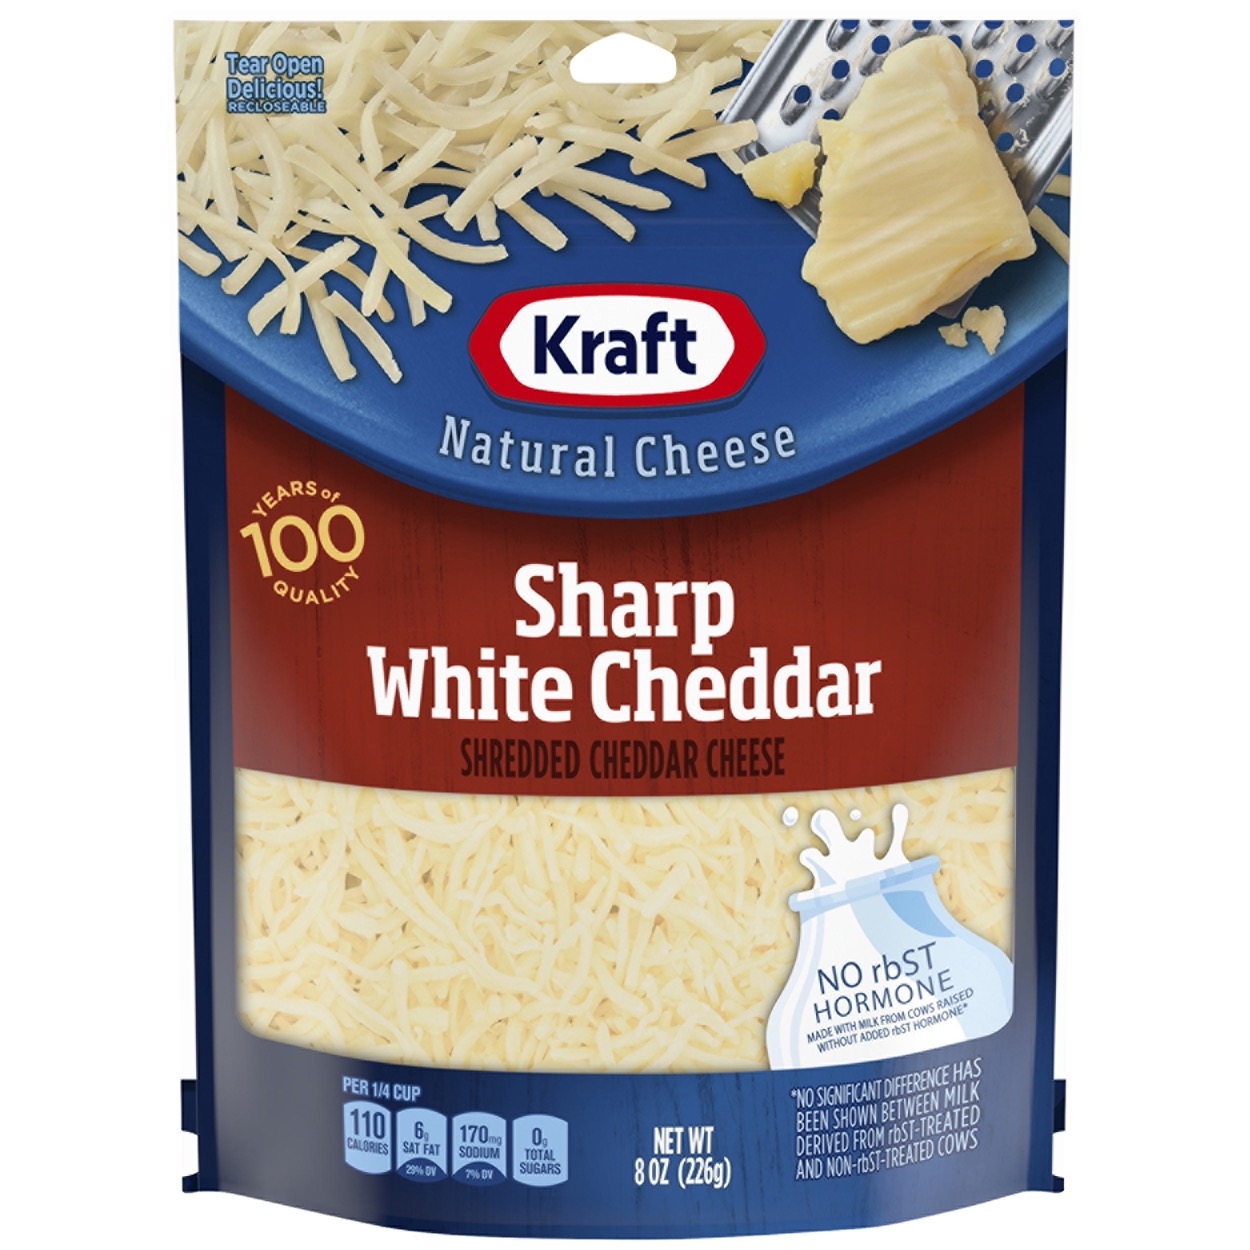 Sharp White Cheddar